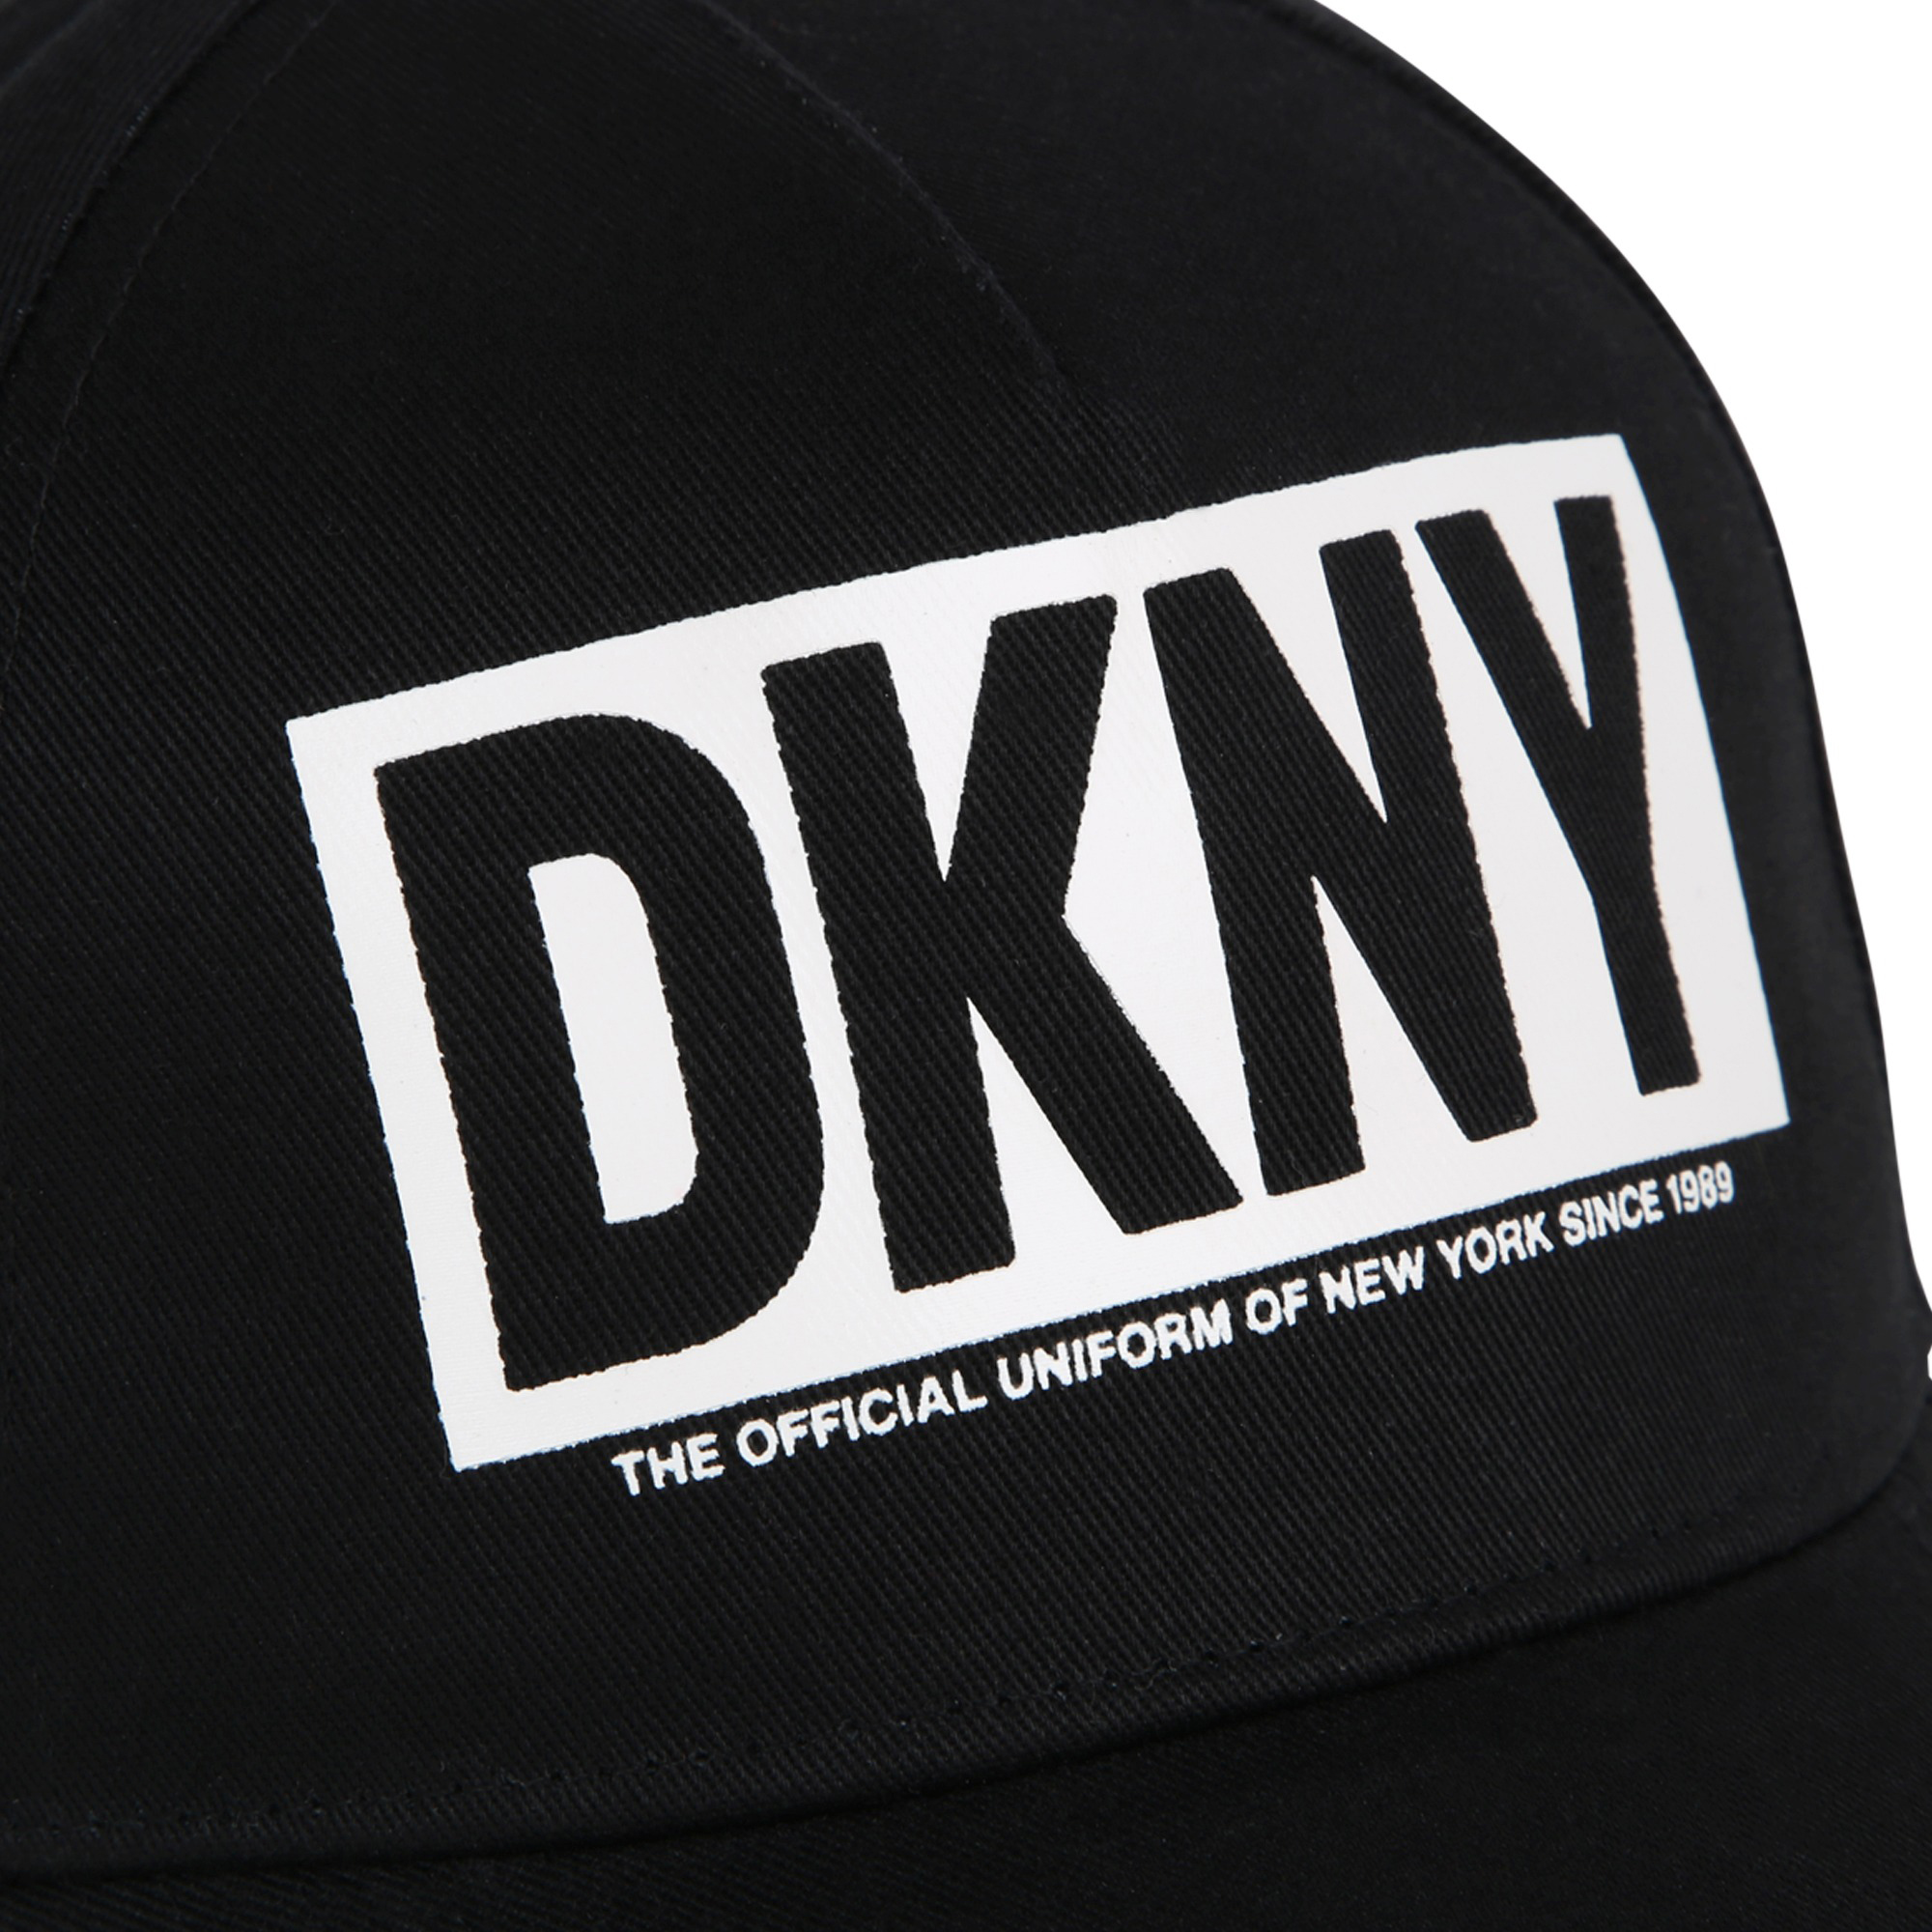 Kappe mit Logo DKNY Für UNISEX